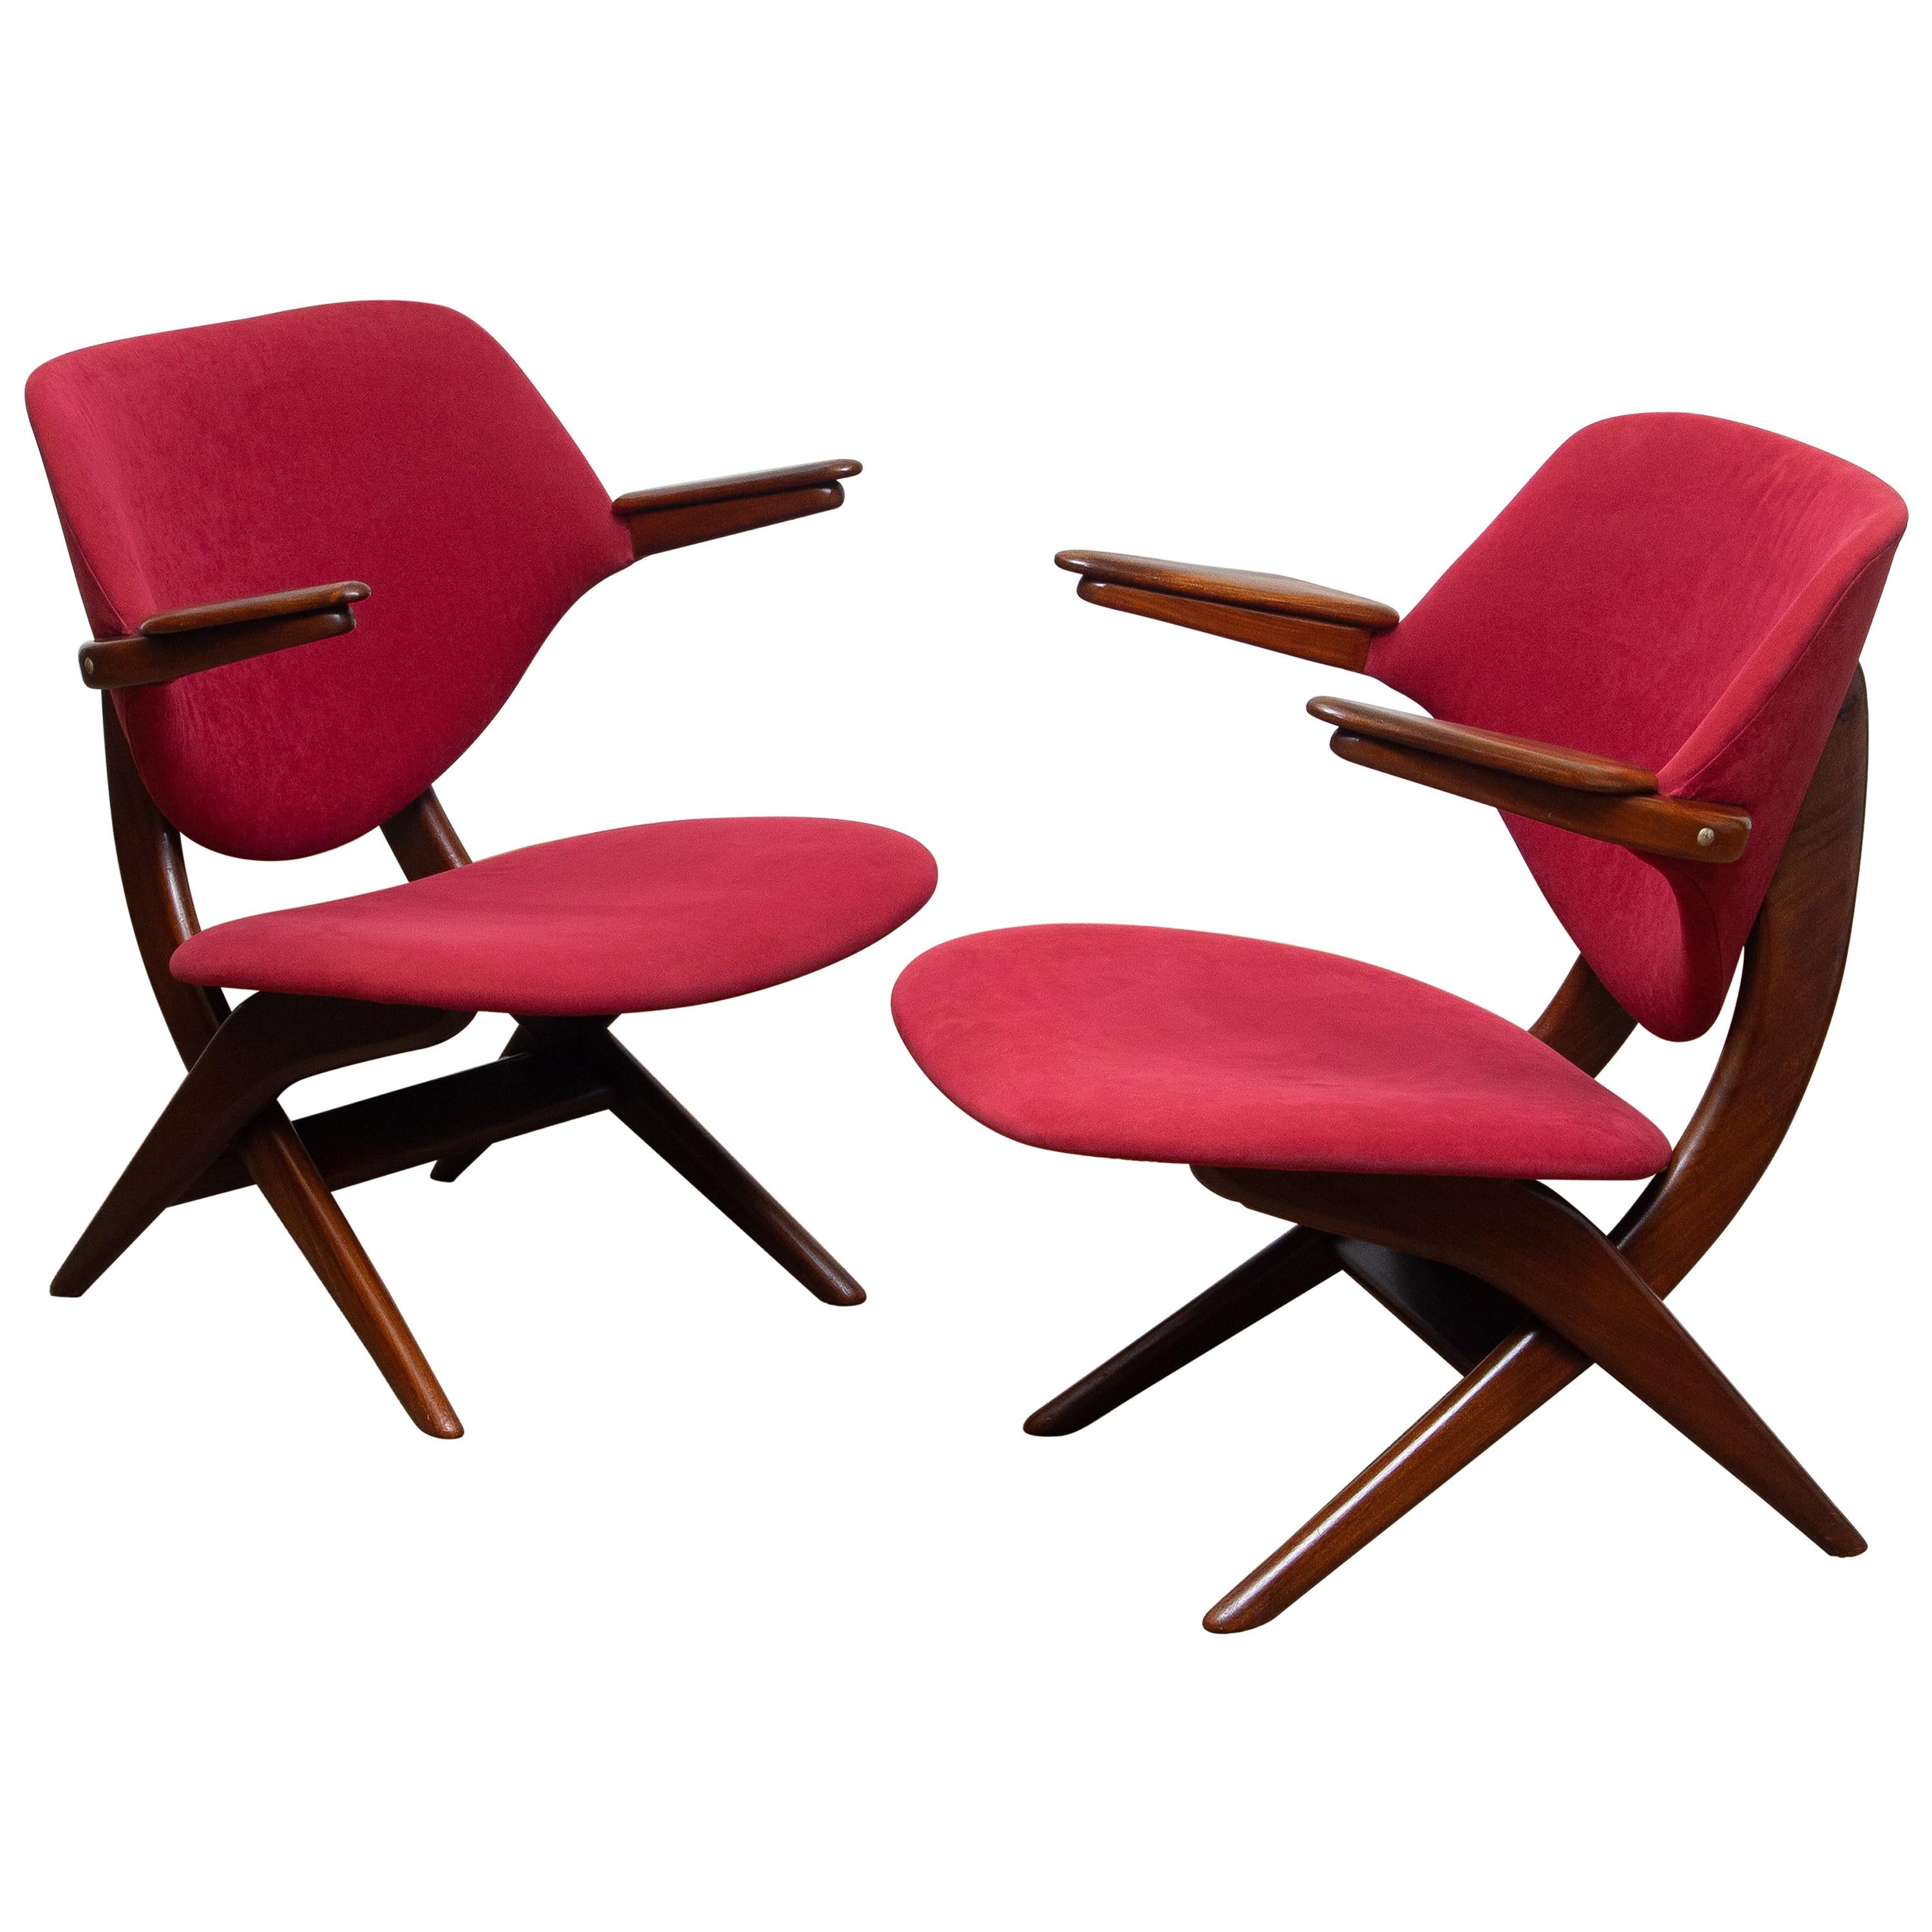 1950s, Set of Two Teak Lounge/Easy Chairs by Louis Van Teeffelen for Wébé 4